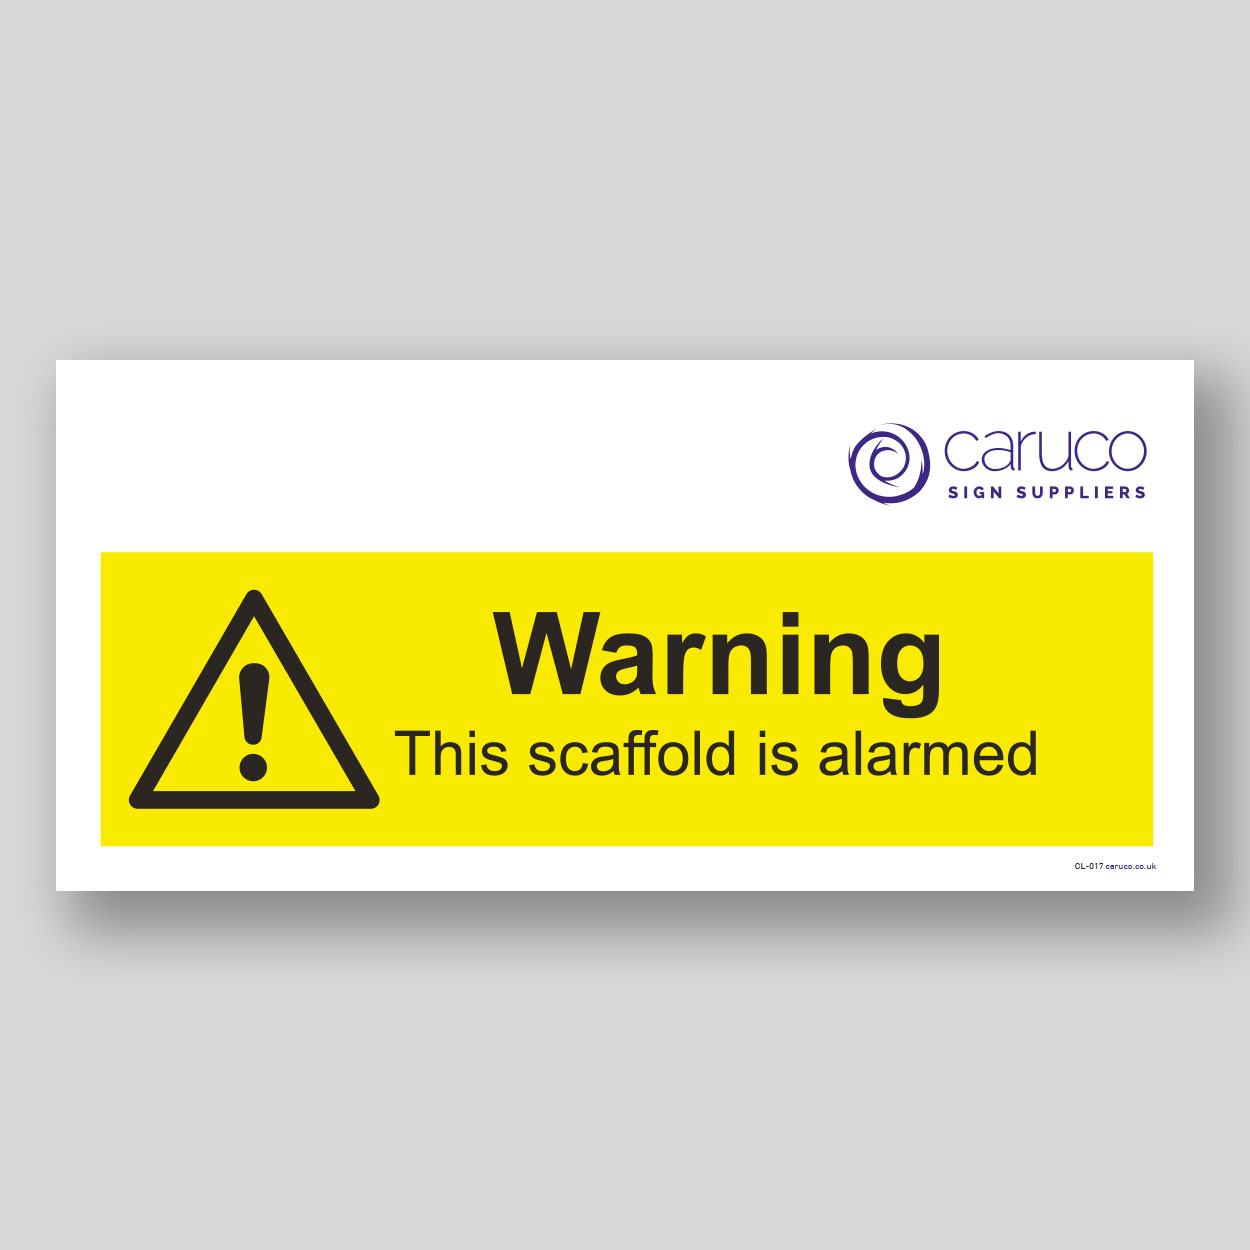 CL-017 Warning - scaffold alarmed